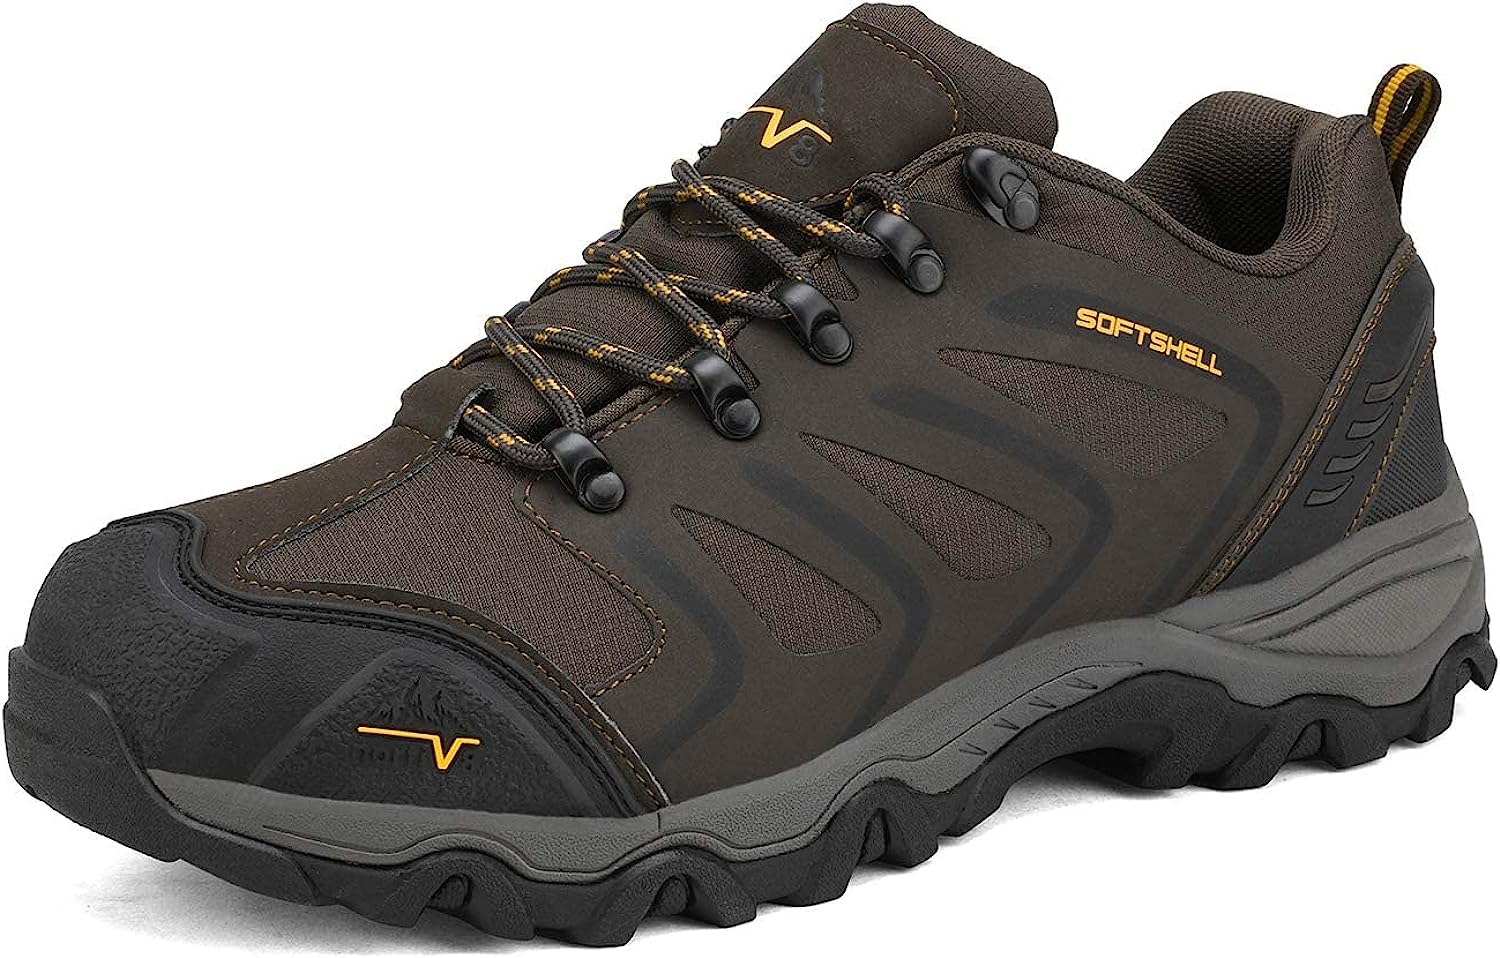 NORTIV 8 Men's Low Top Waterproof Hiking Shoes [...]